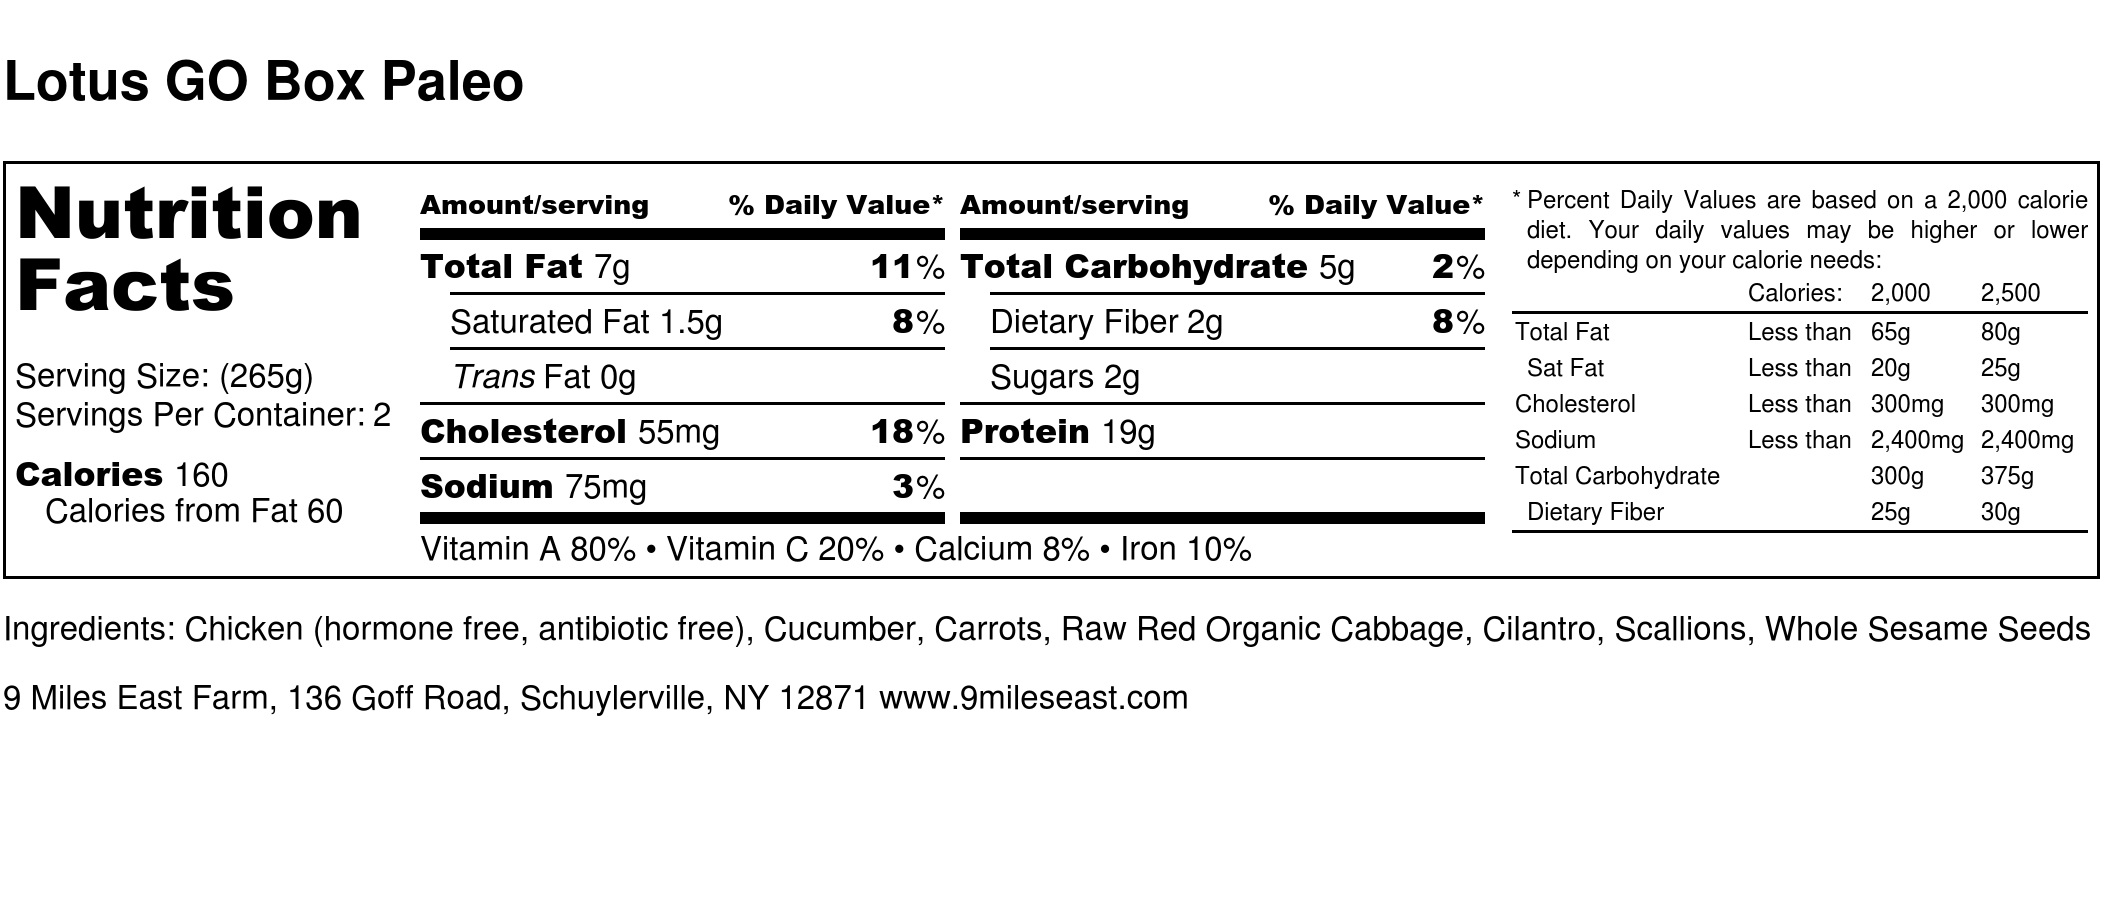 Lotus GO Box Paleo - Nutrition Label.jpg